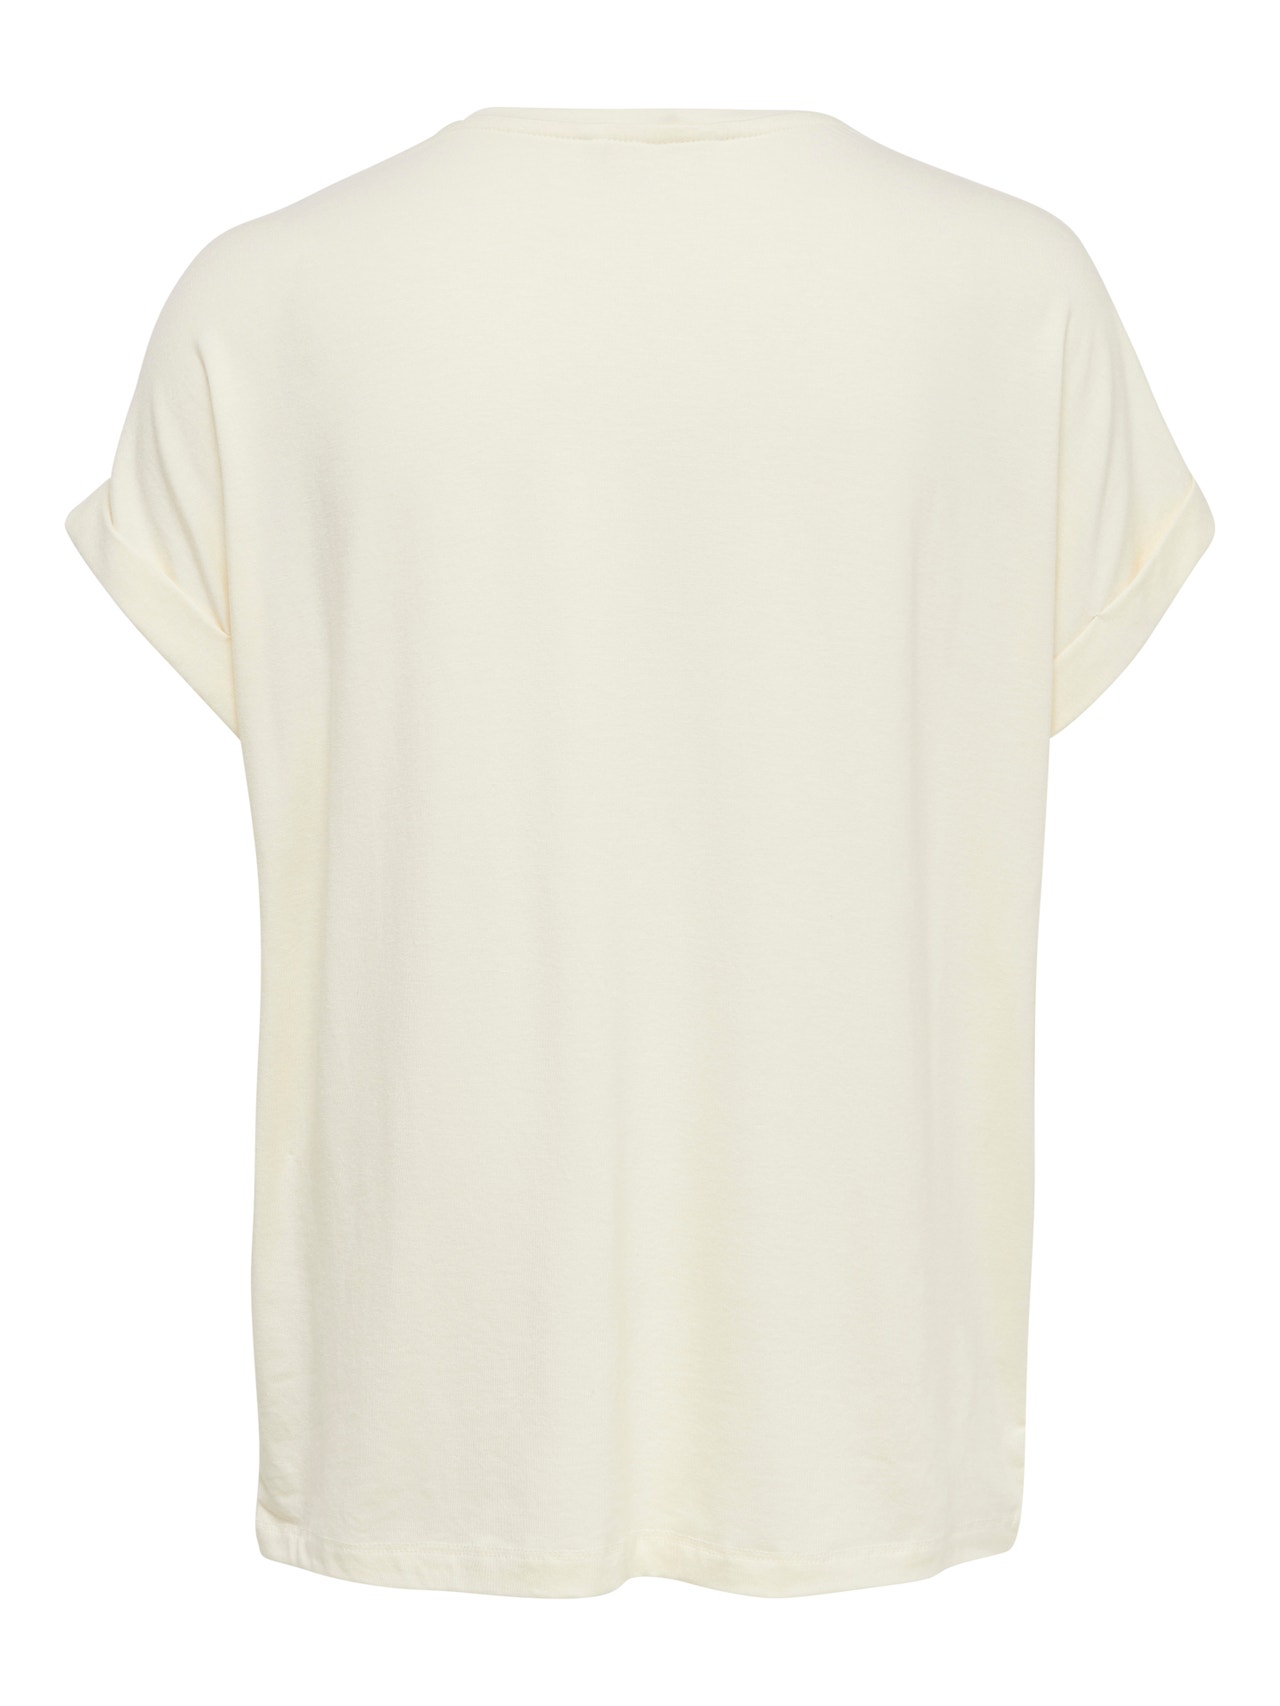 ONLY Ruimvallend T-shirt -Antique White - 15106662